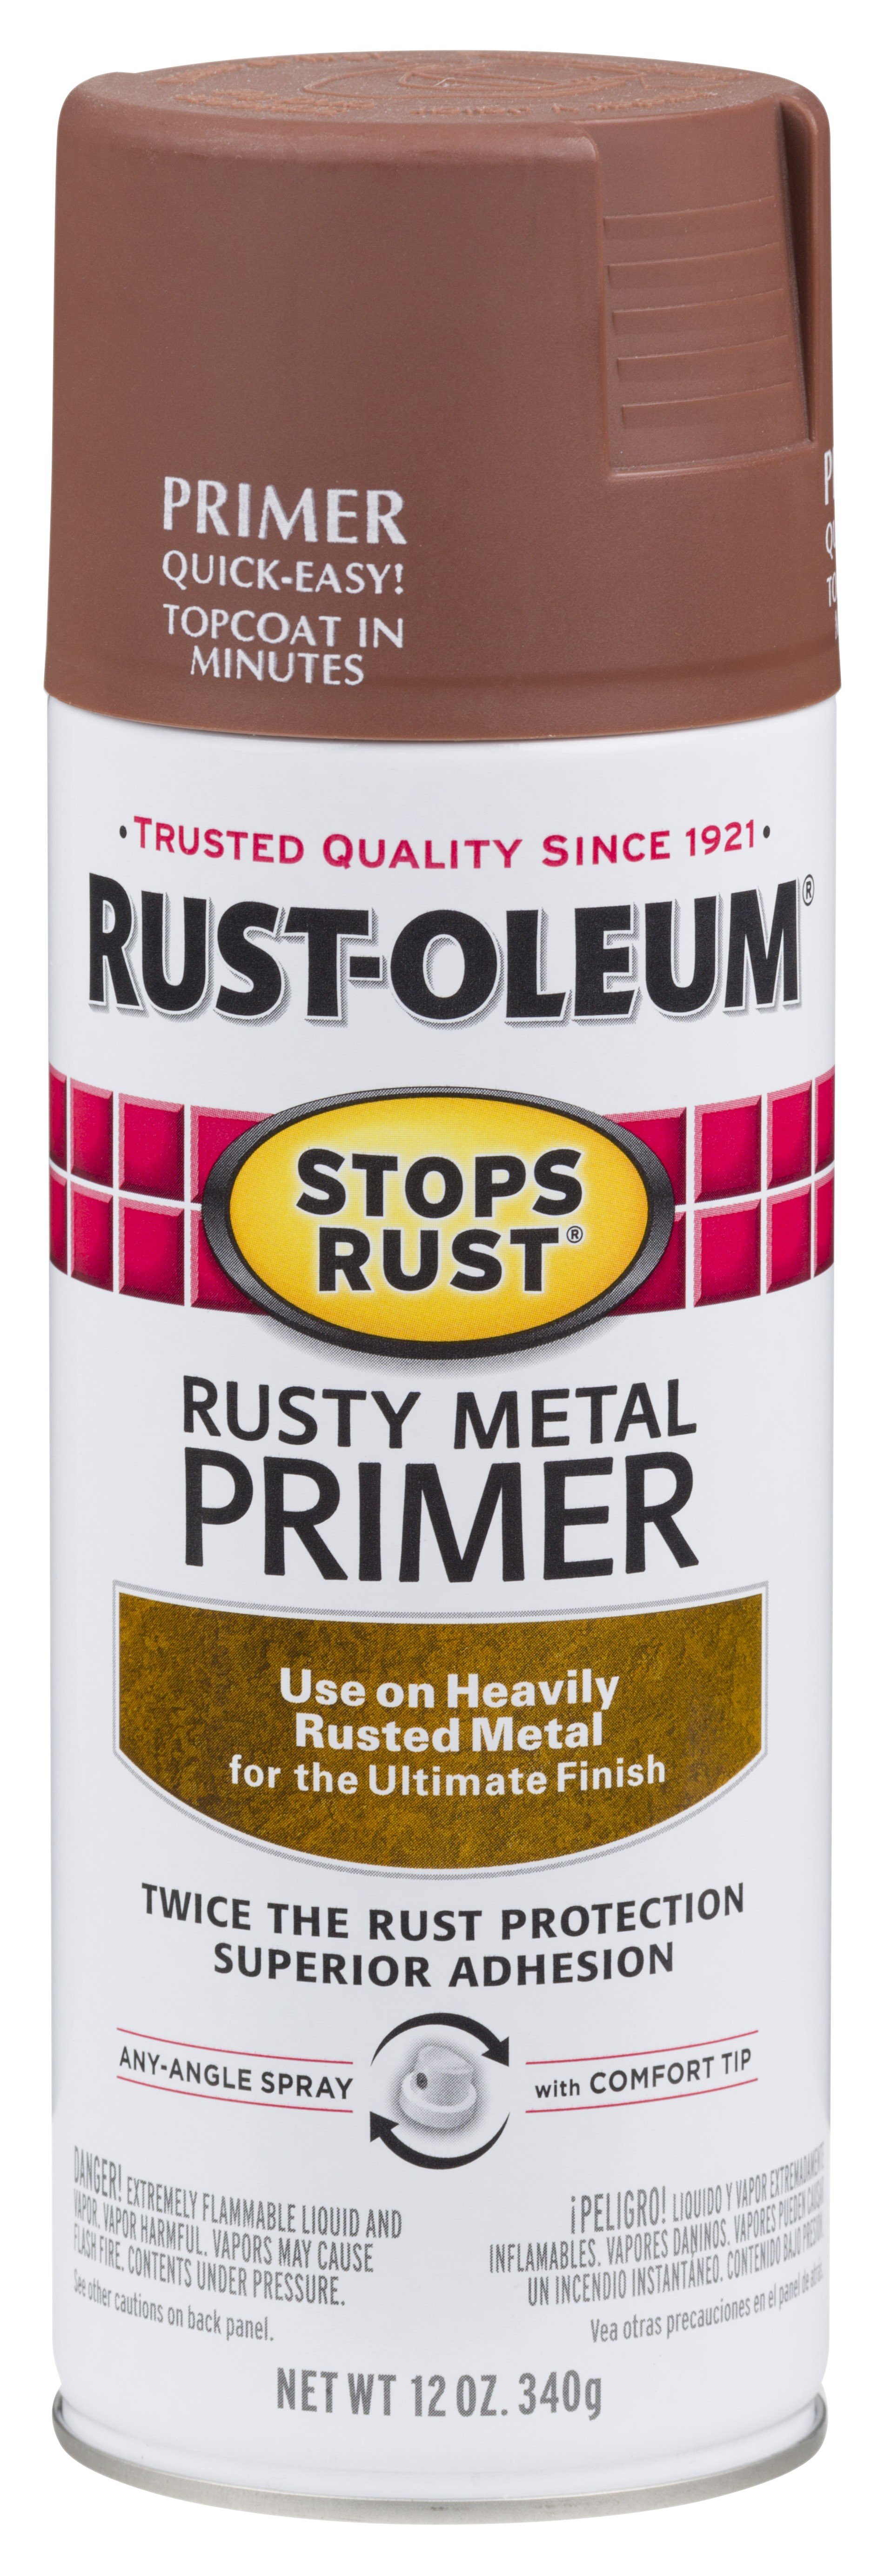 Rust-Oleum Stops Rust Rusty Metal Primer Spray - 7769830